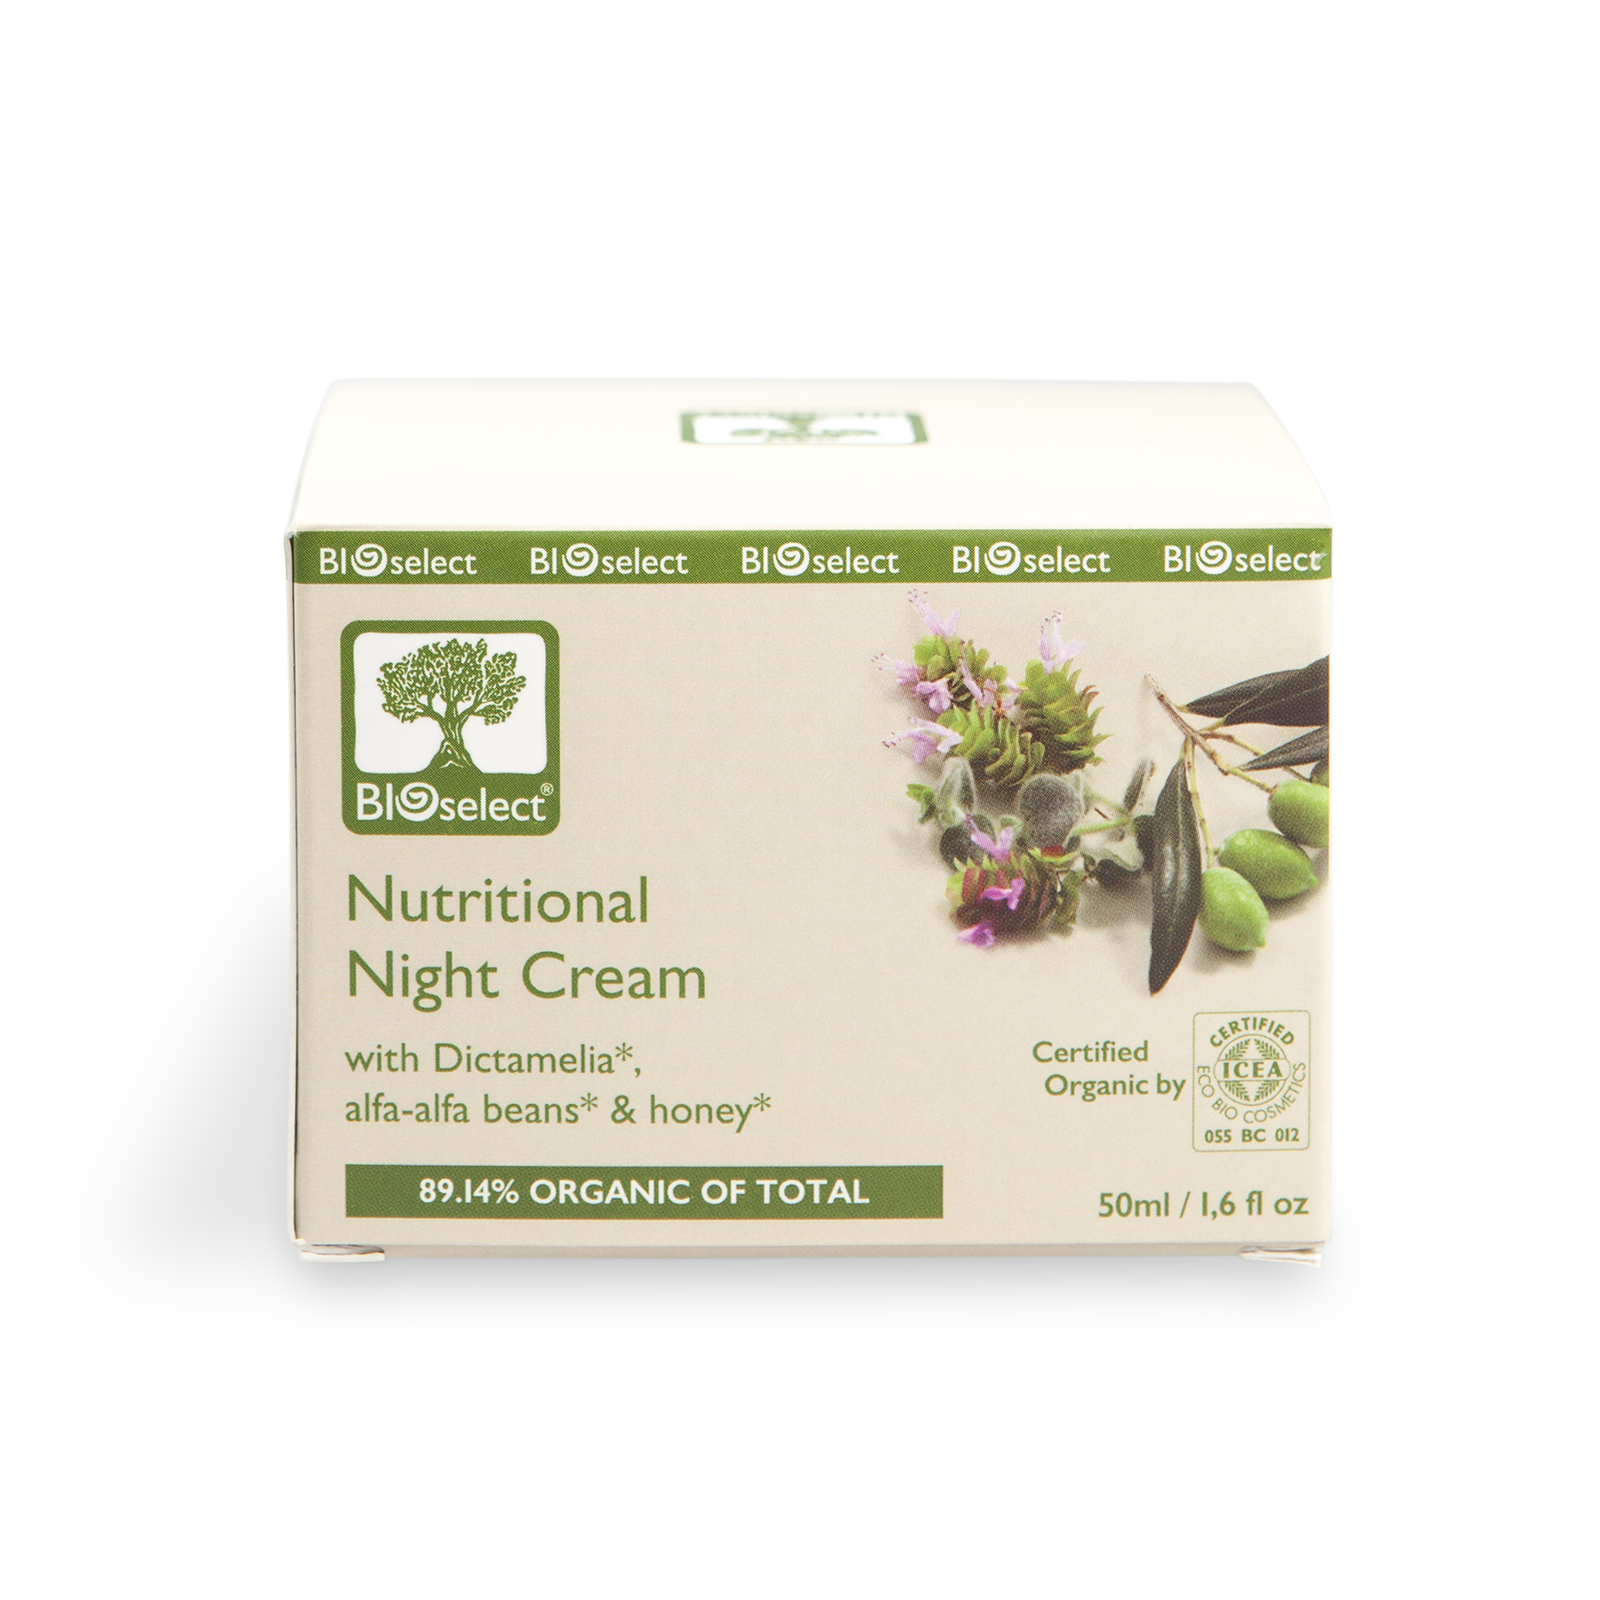 Bioselect Nutritional Night Cream